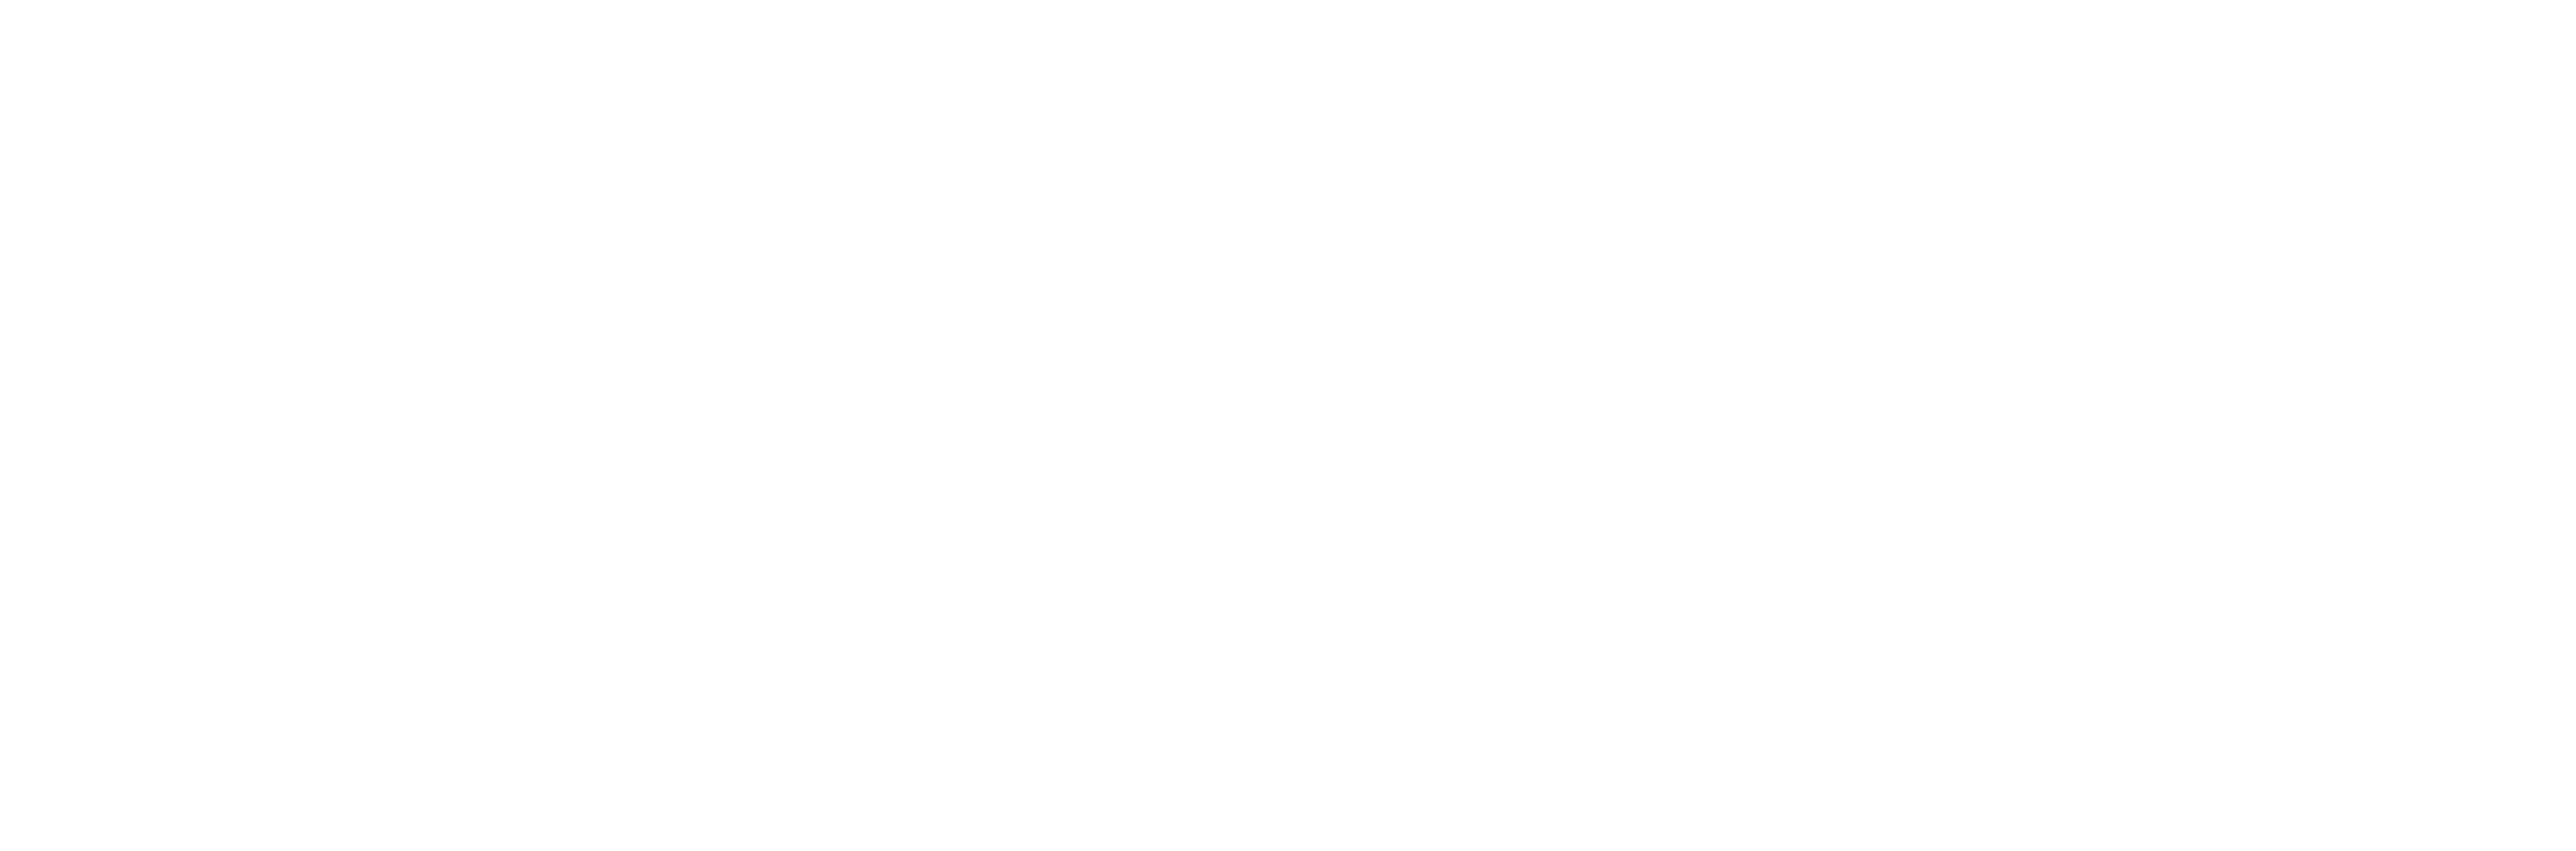 Giaimo Coiffure Logo